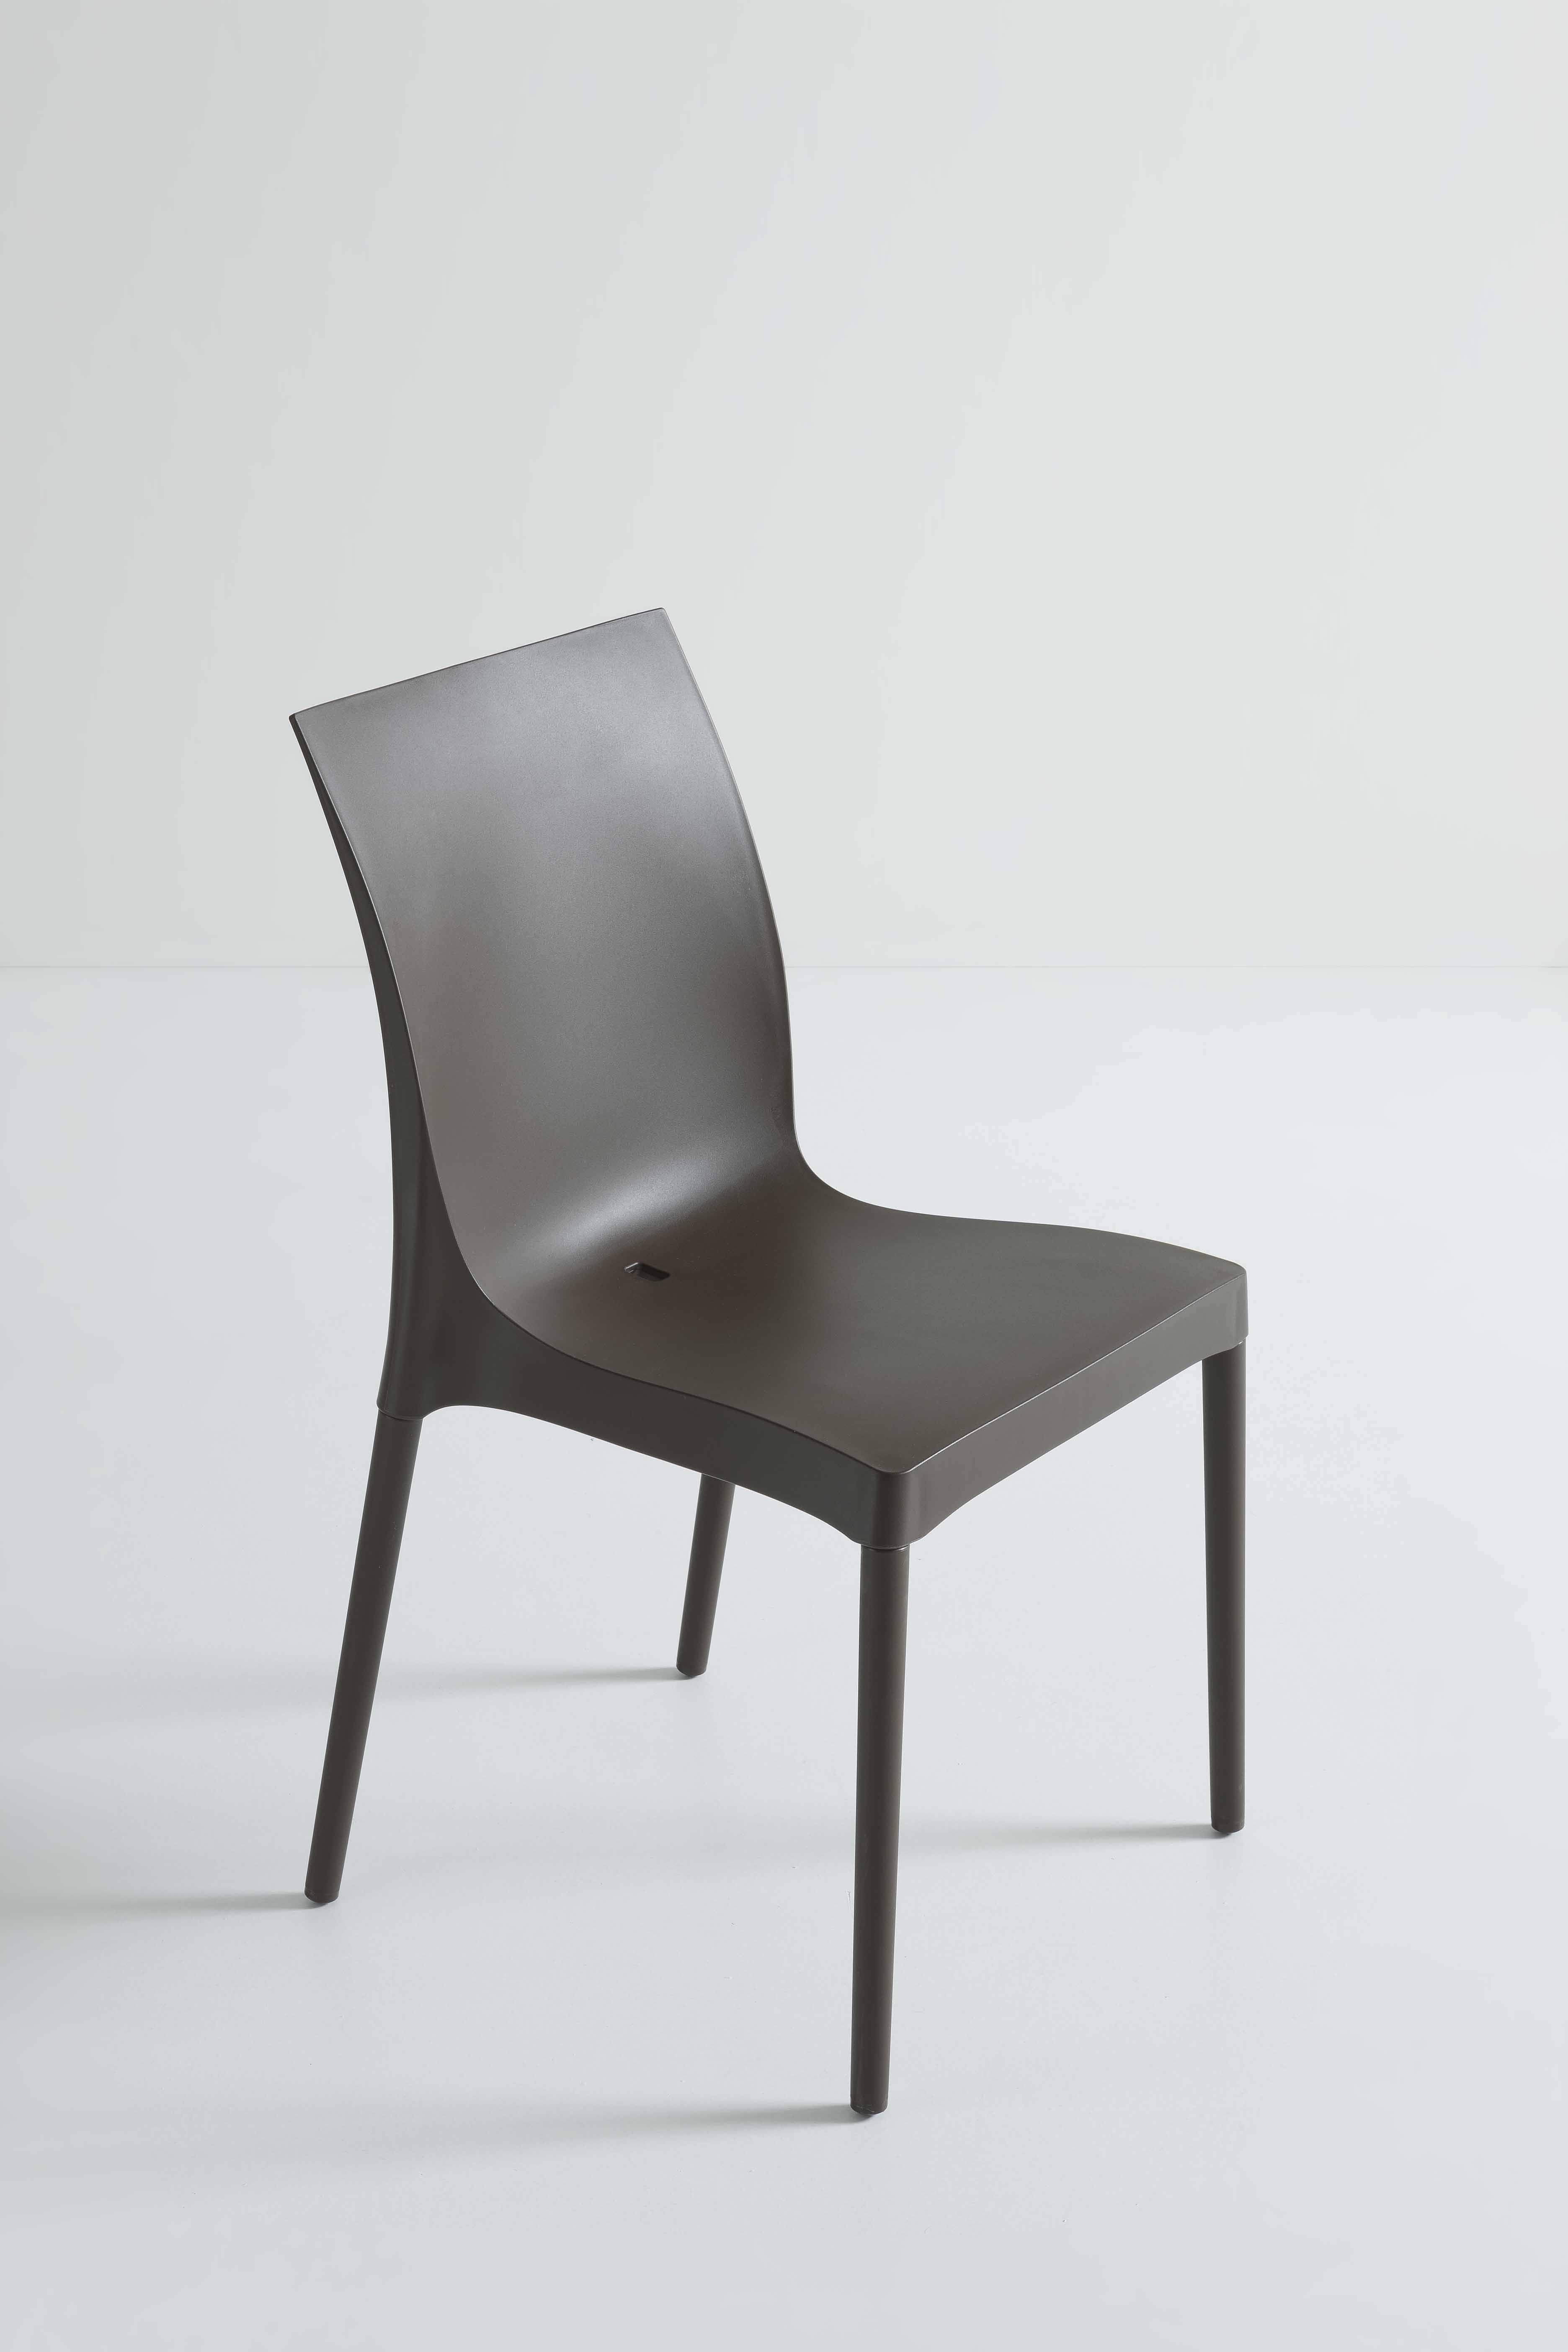 Gaber IRIS Gartenstuhl - stapelbar - Metall mit Kunststoff Sitzschale - Sand